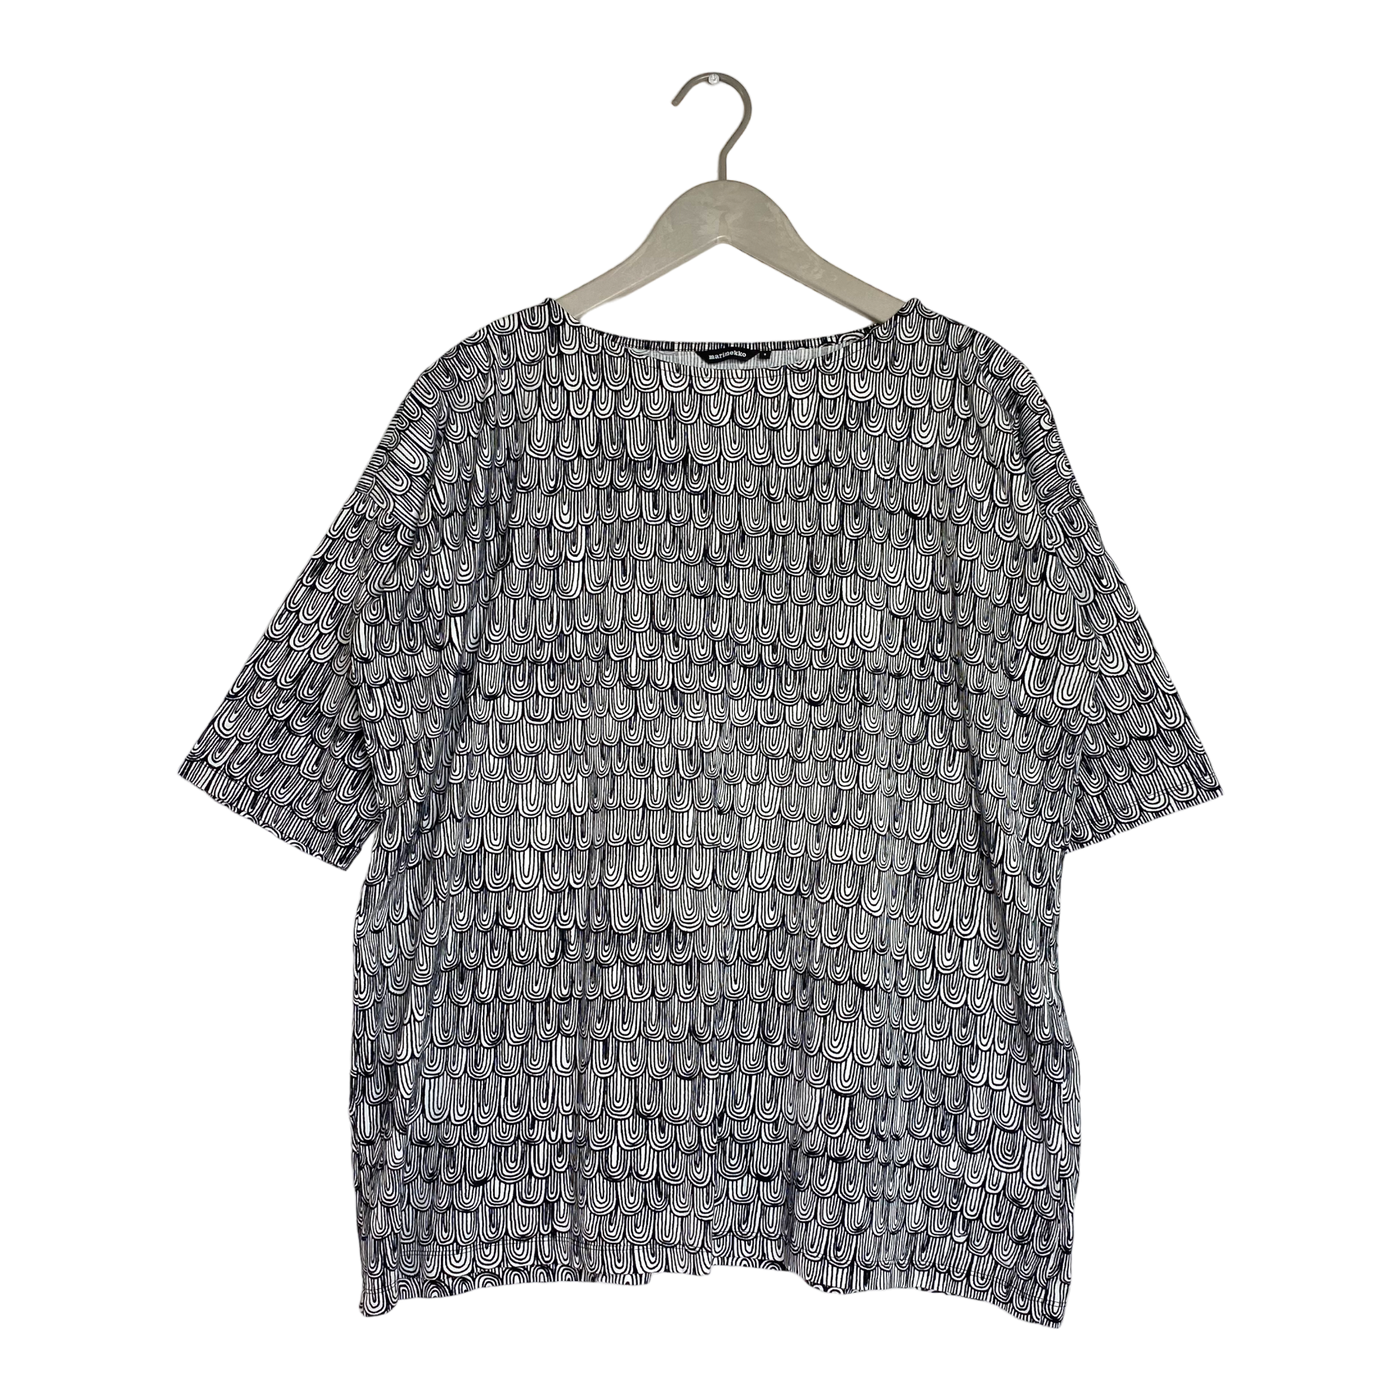 Marimekko orvokki shirt, vellamo | woman S